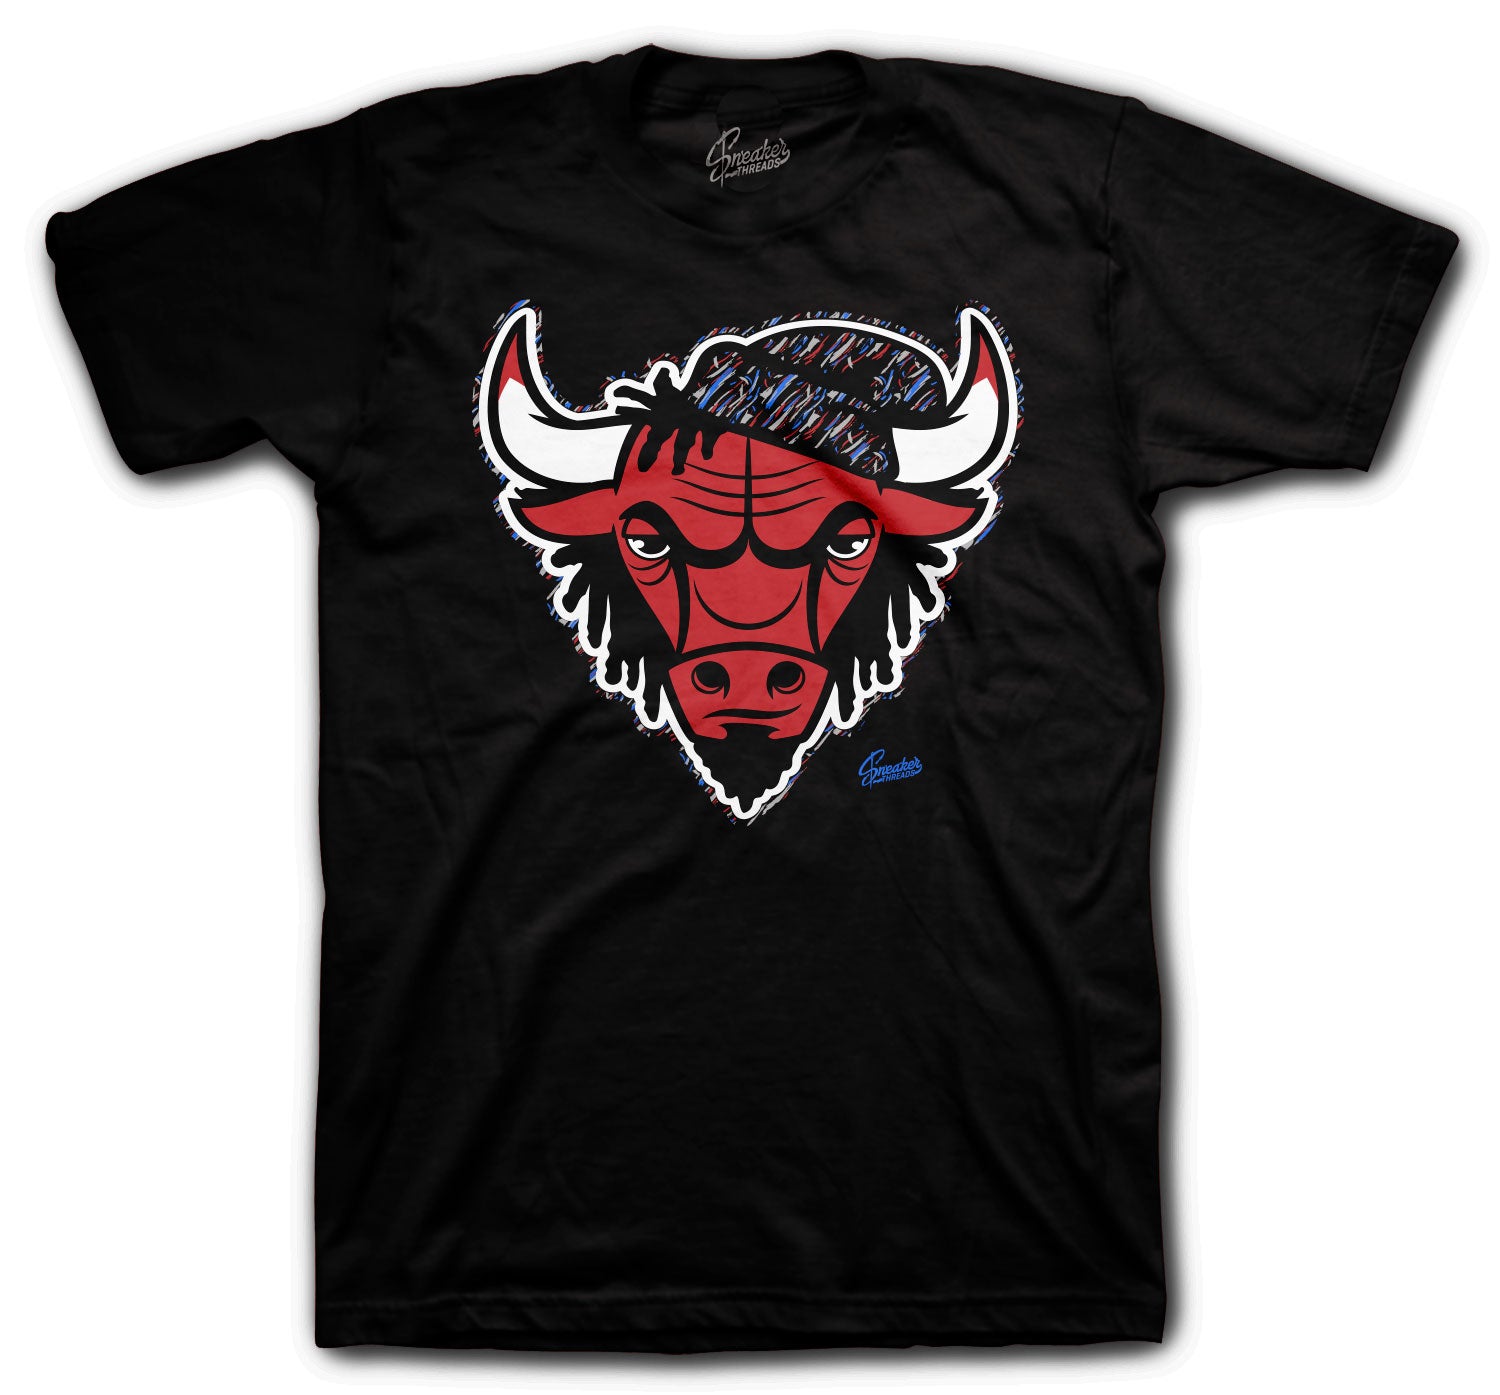 Retro 4 What The Four Shirts- Rasta Bull - Black